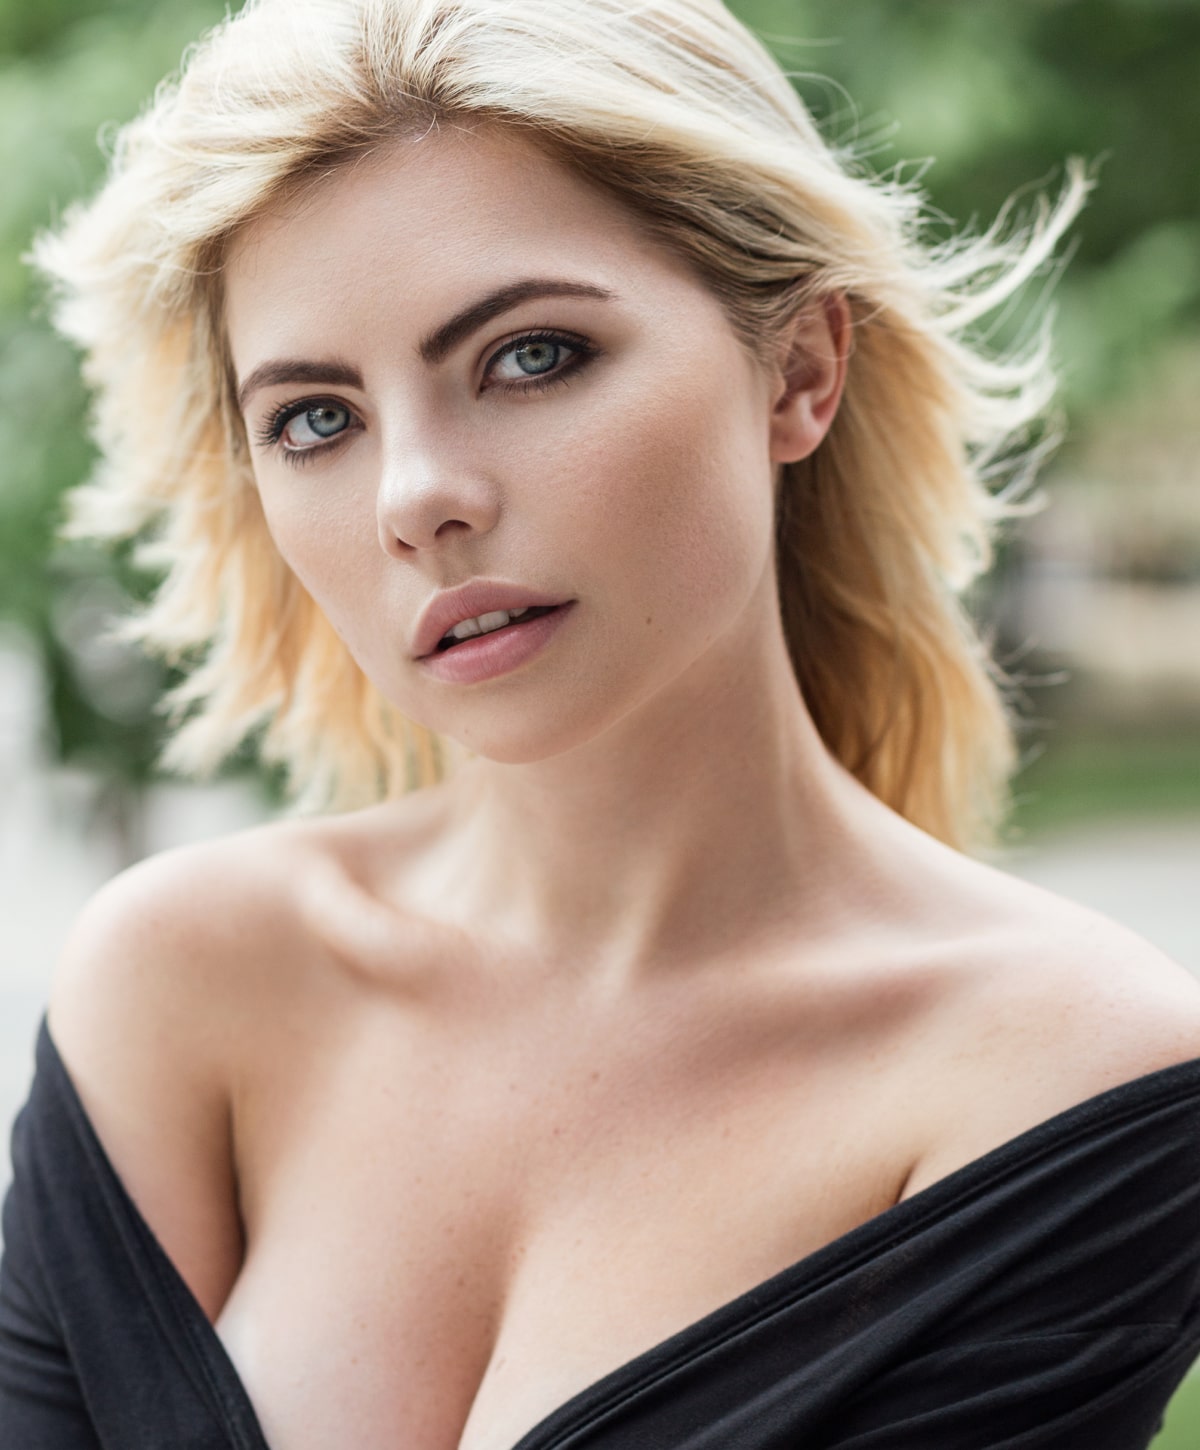 Kansas City transaxillary breast augmentation model with blonde hair